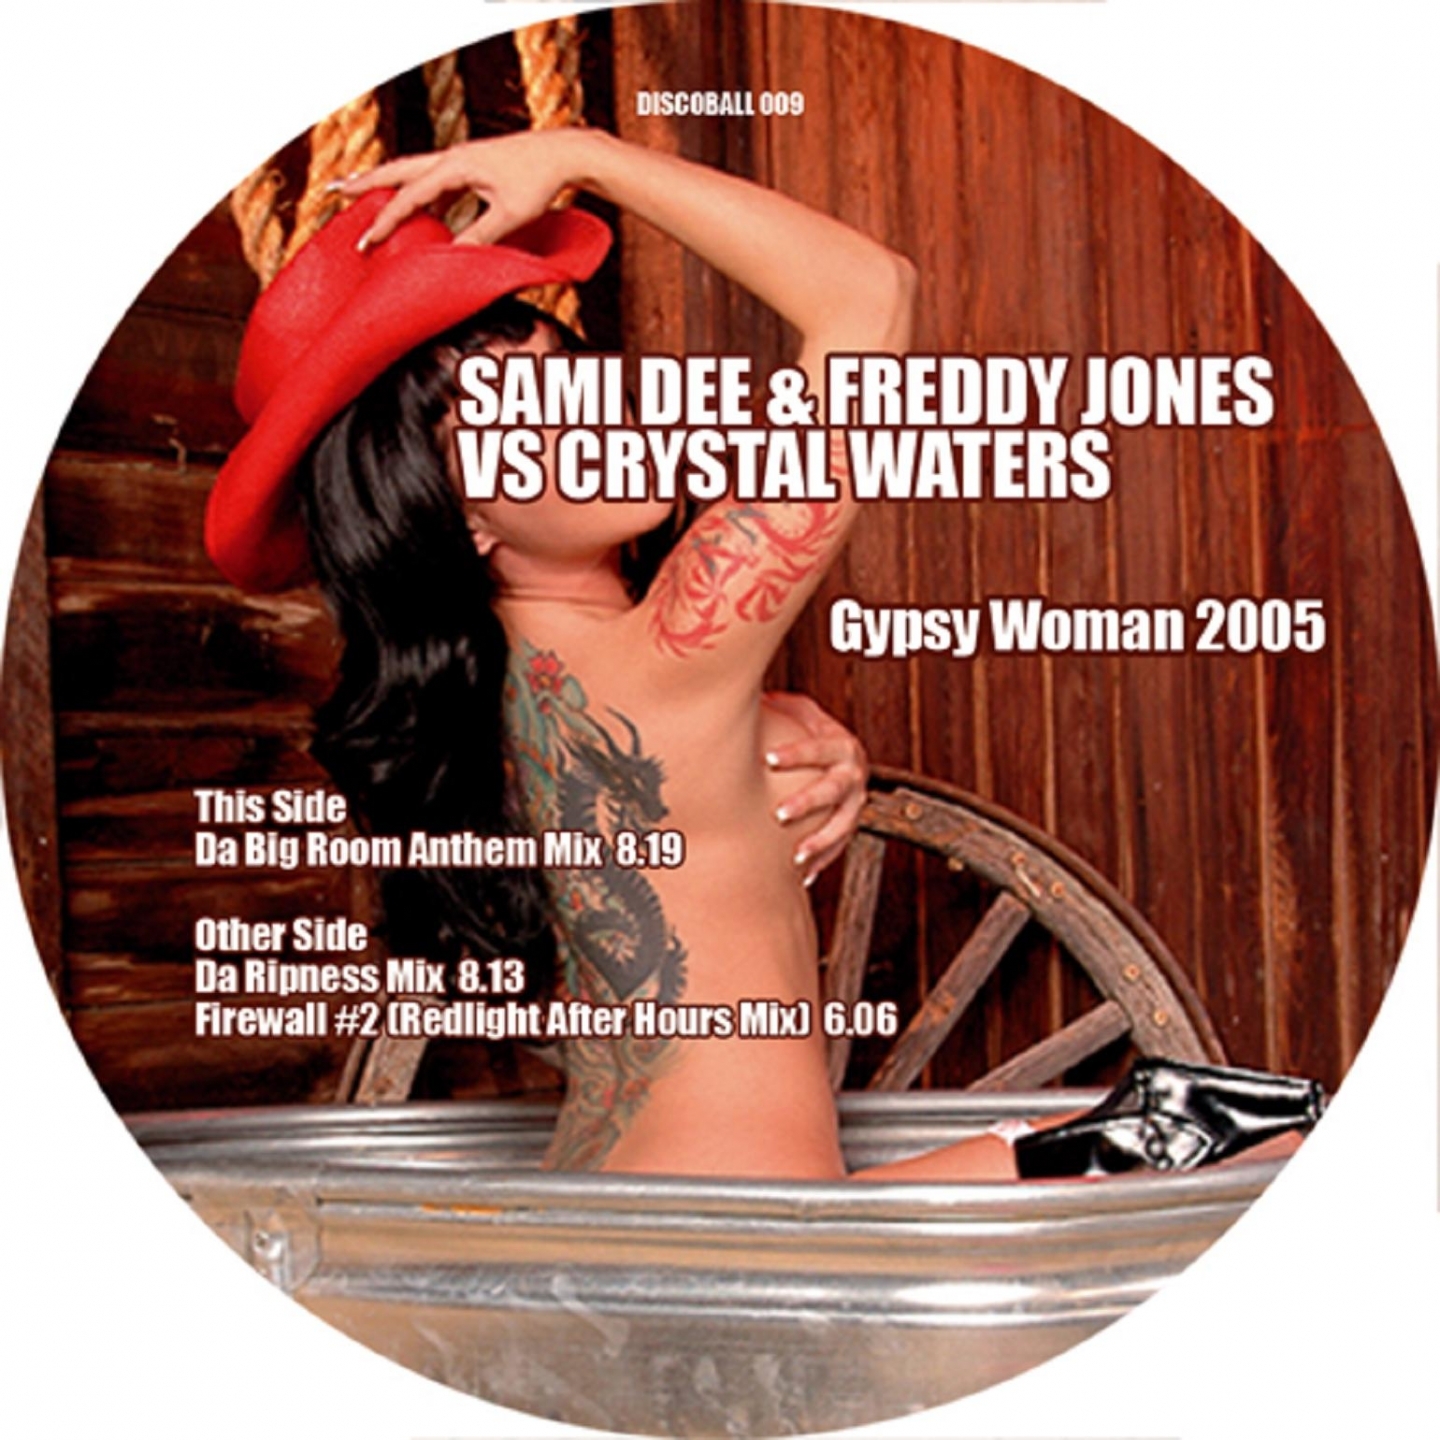 Gypsy Woman 2006 (La-Da-Dee) (The Disco Boys Remix Edit)